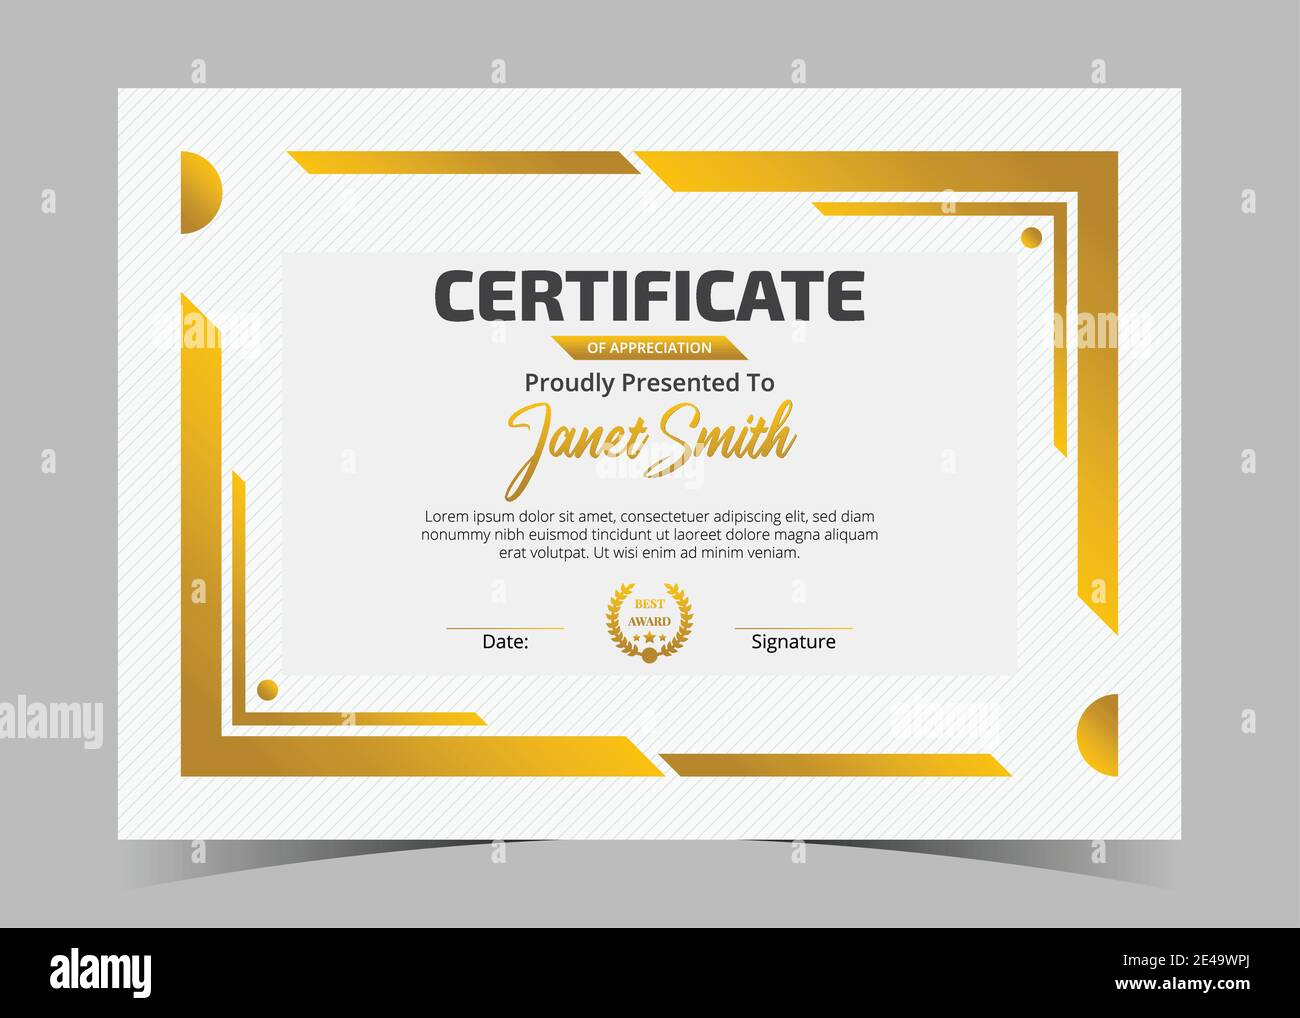 Award certificate template -Fotos und -Bildmaterial in hoher  For Template For Certificate Of Award